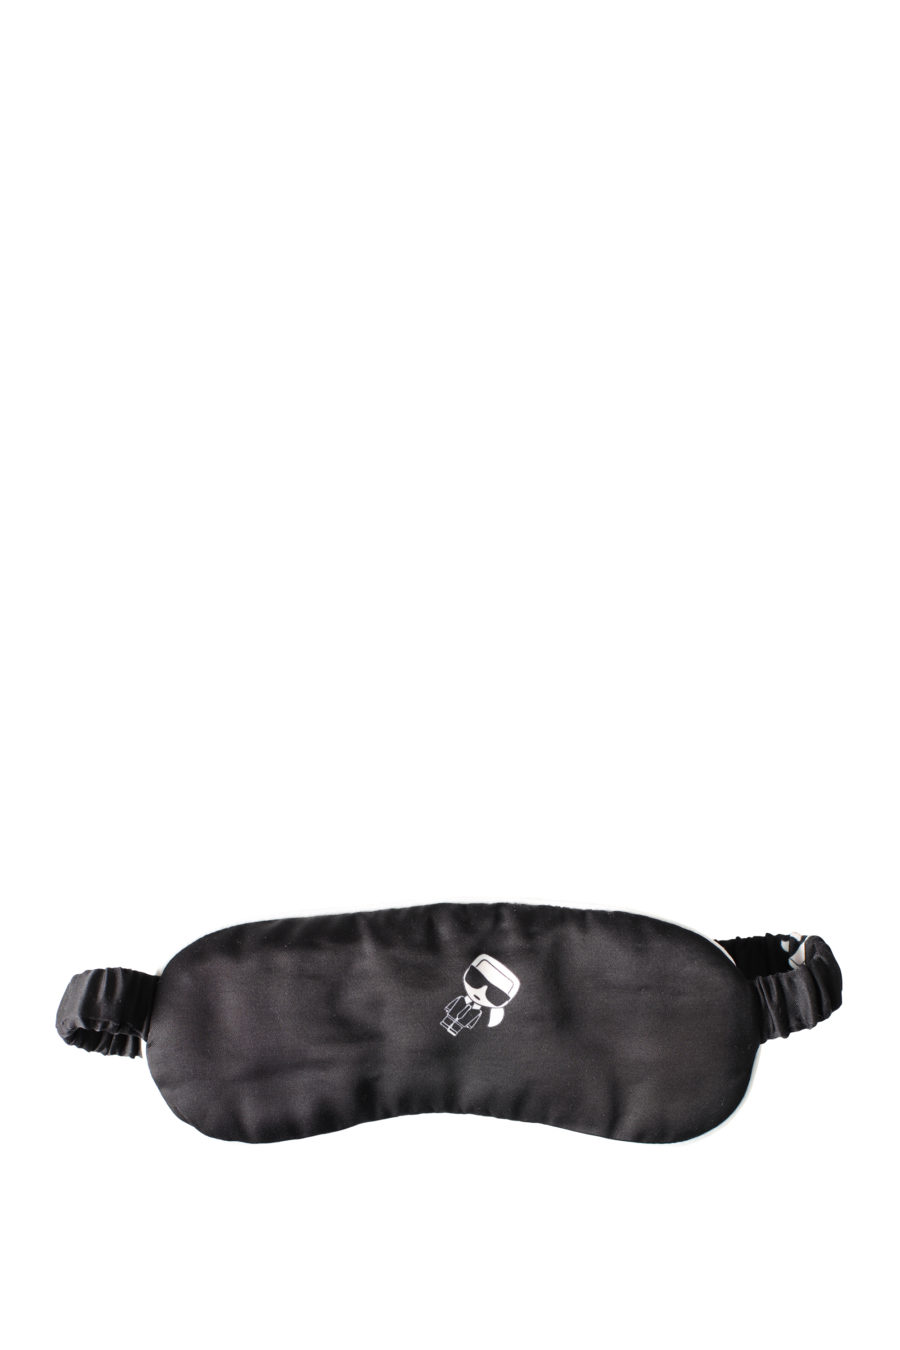 Set de regalo pijama de color negro - IMG 3306